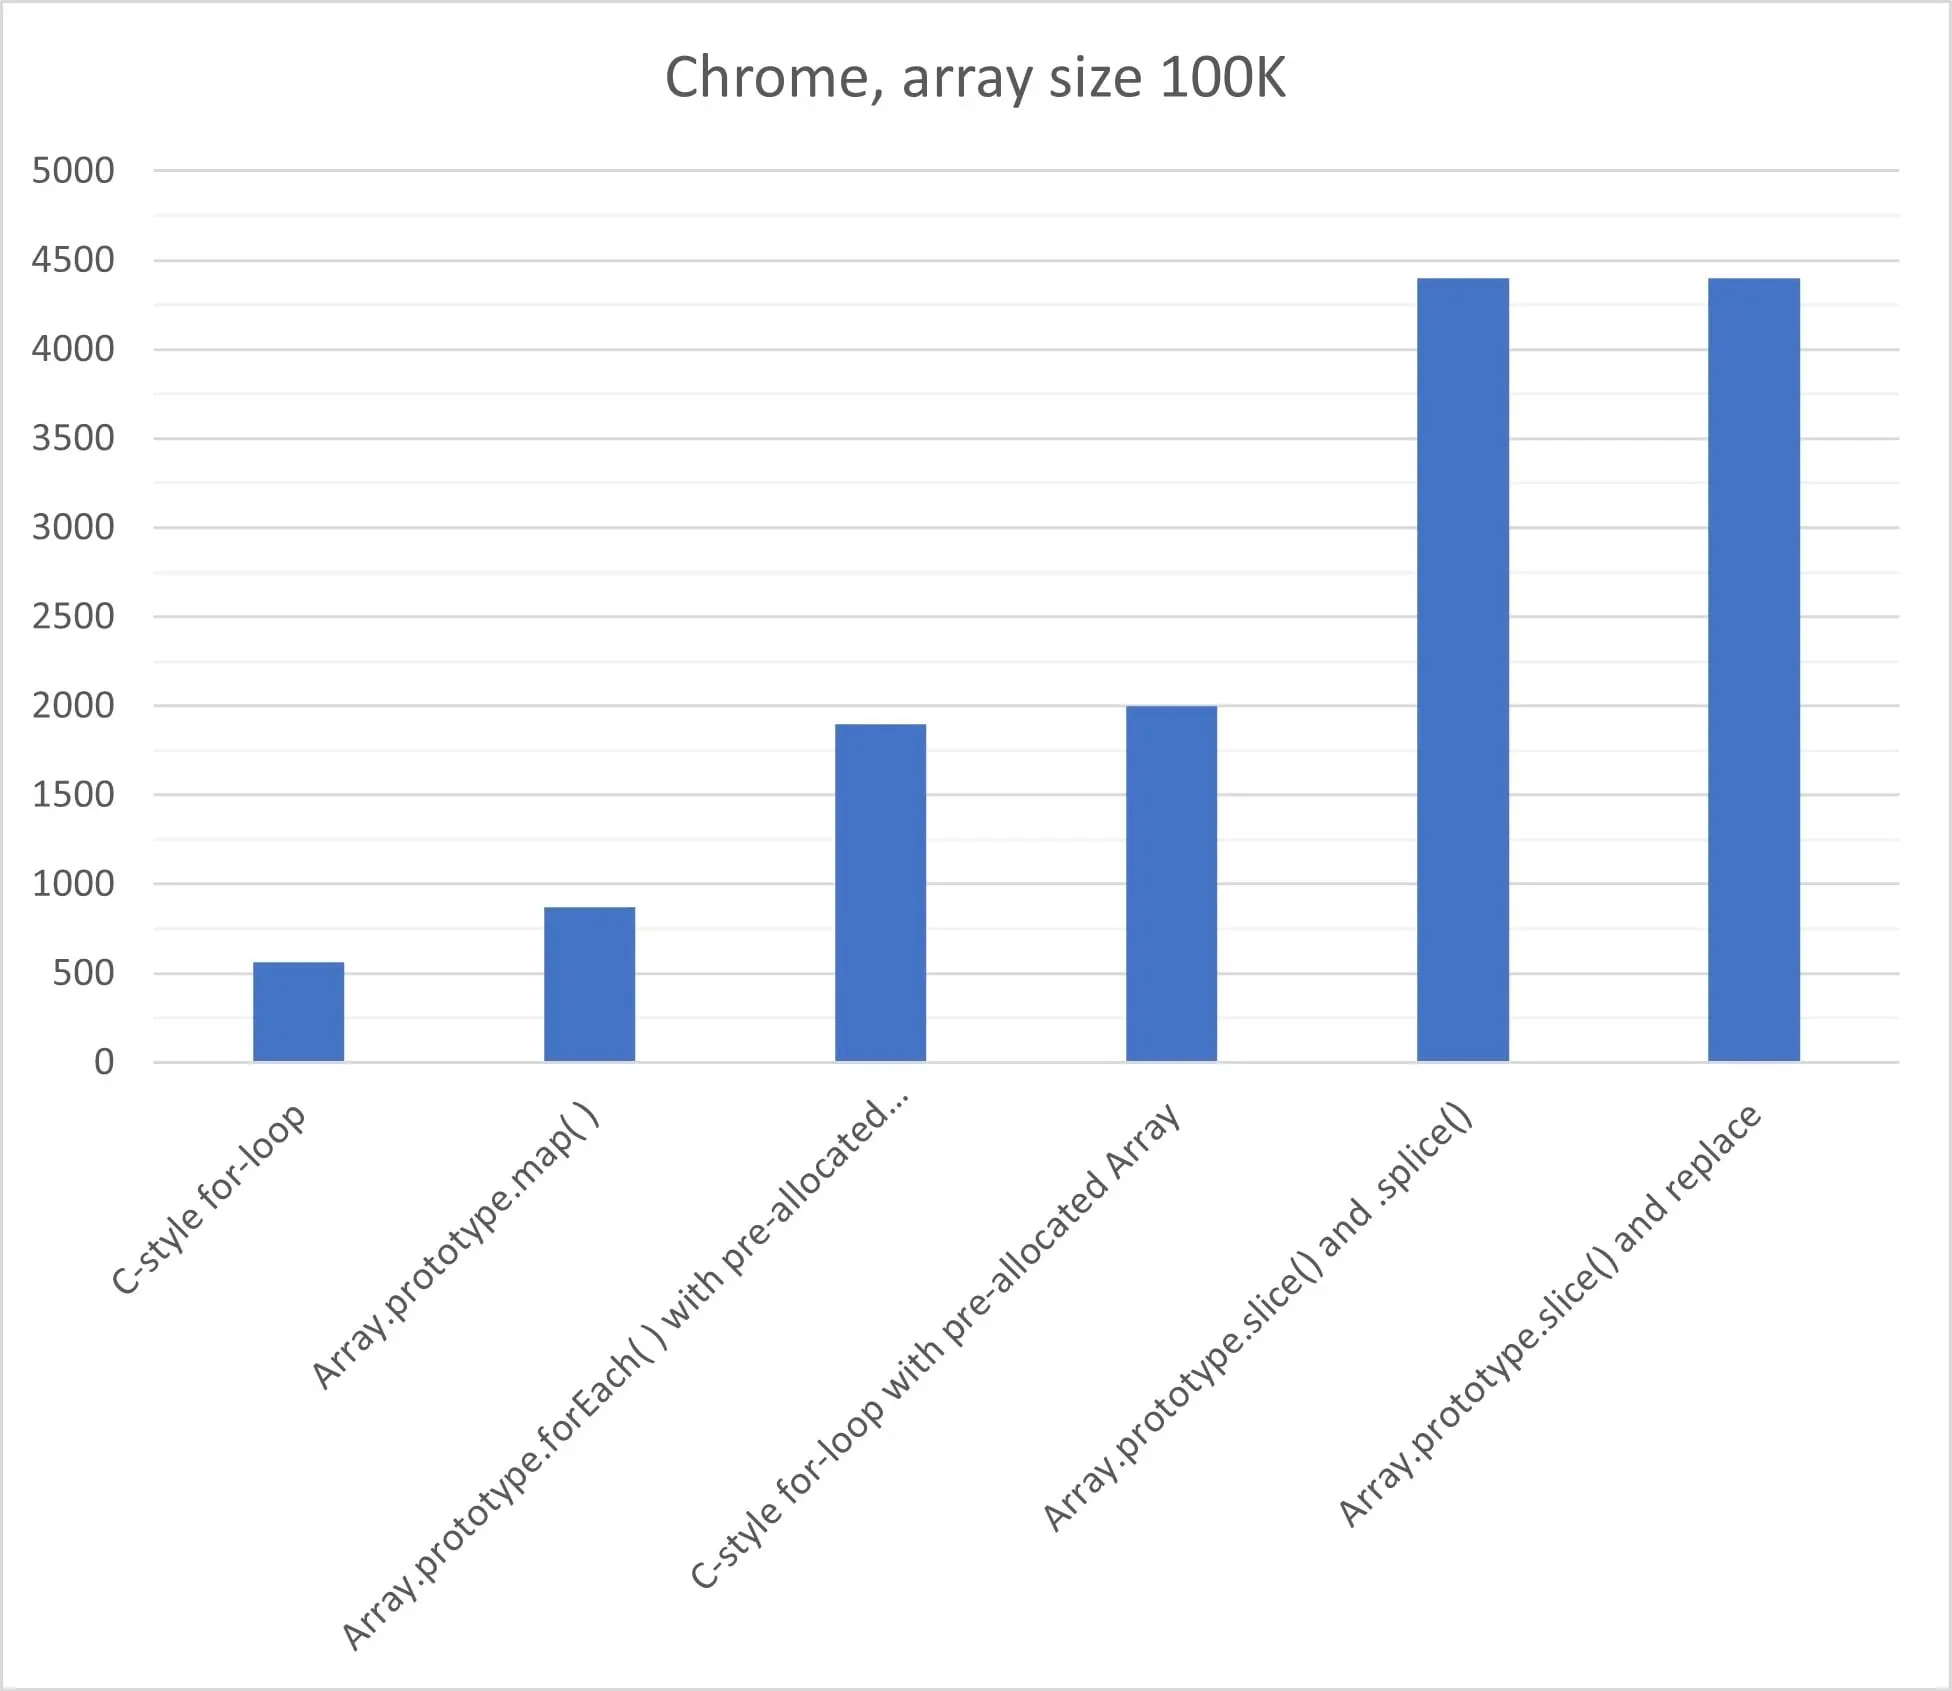 Chrome benchmark at array size 100K